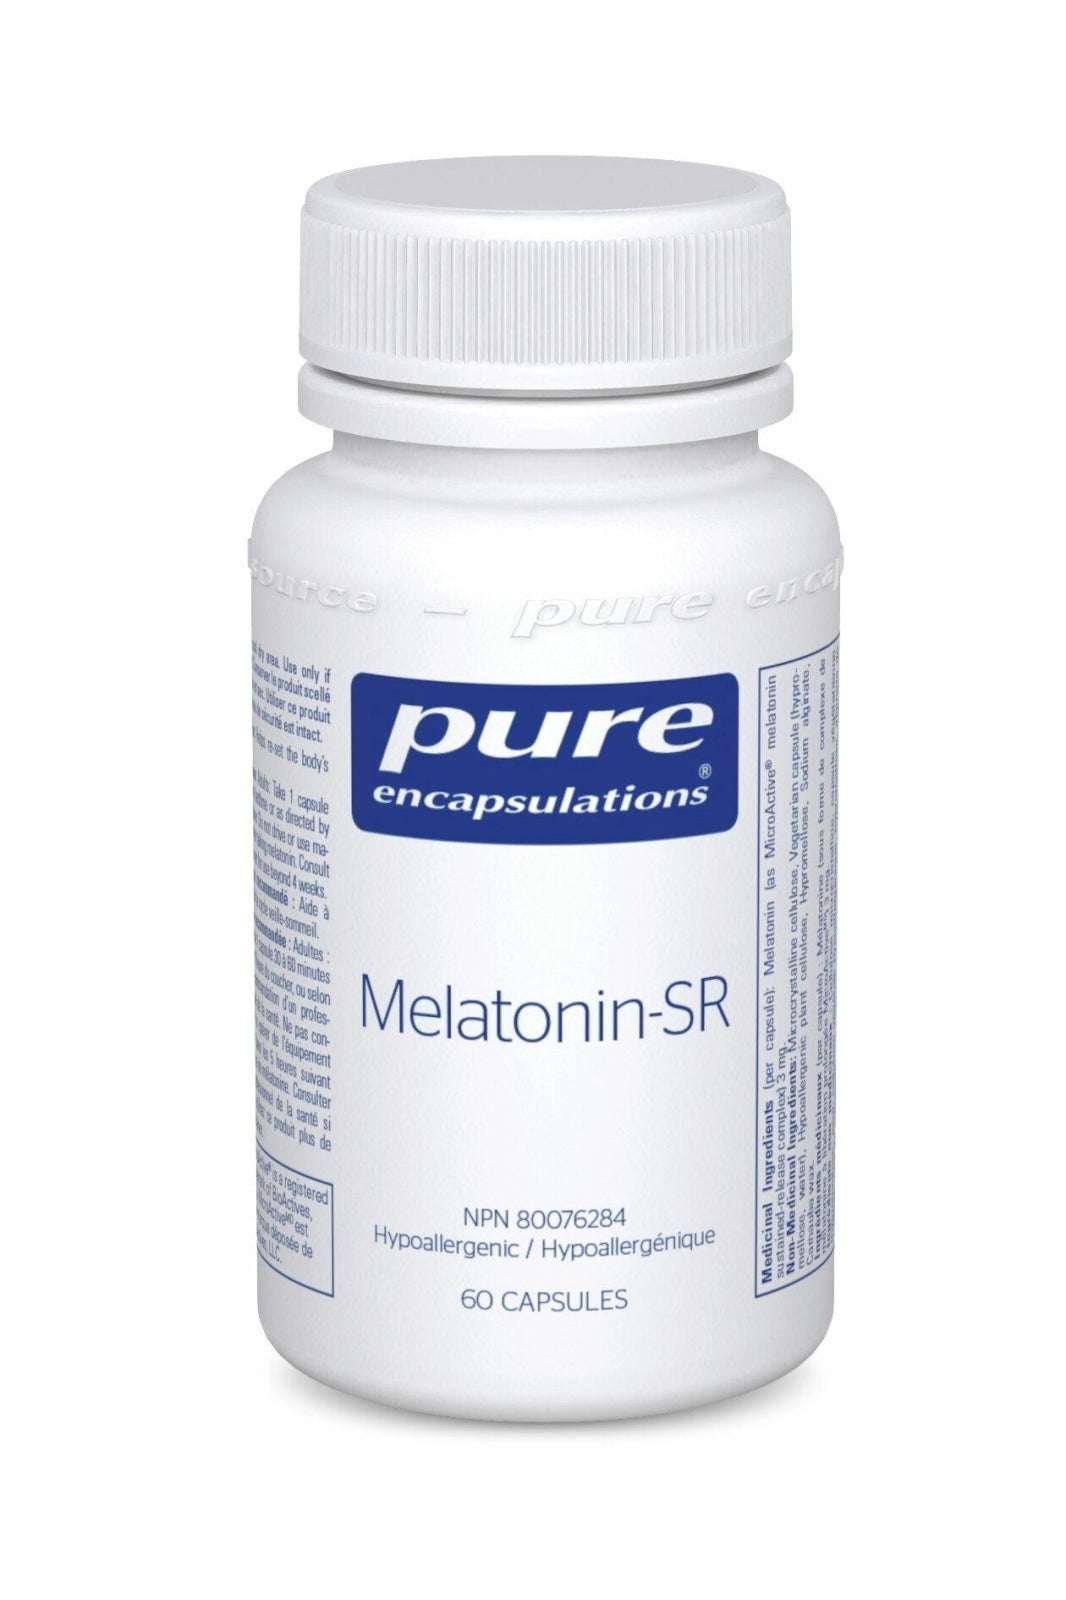 Pure encapsulations Melatonin - SR (60 caps)